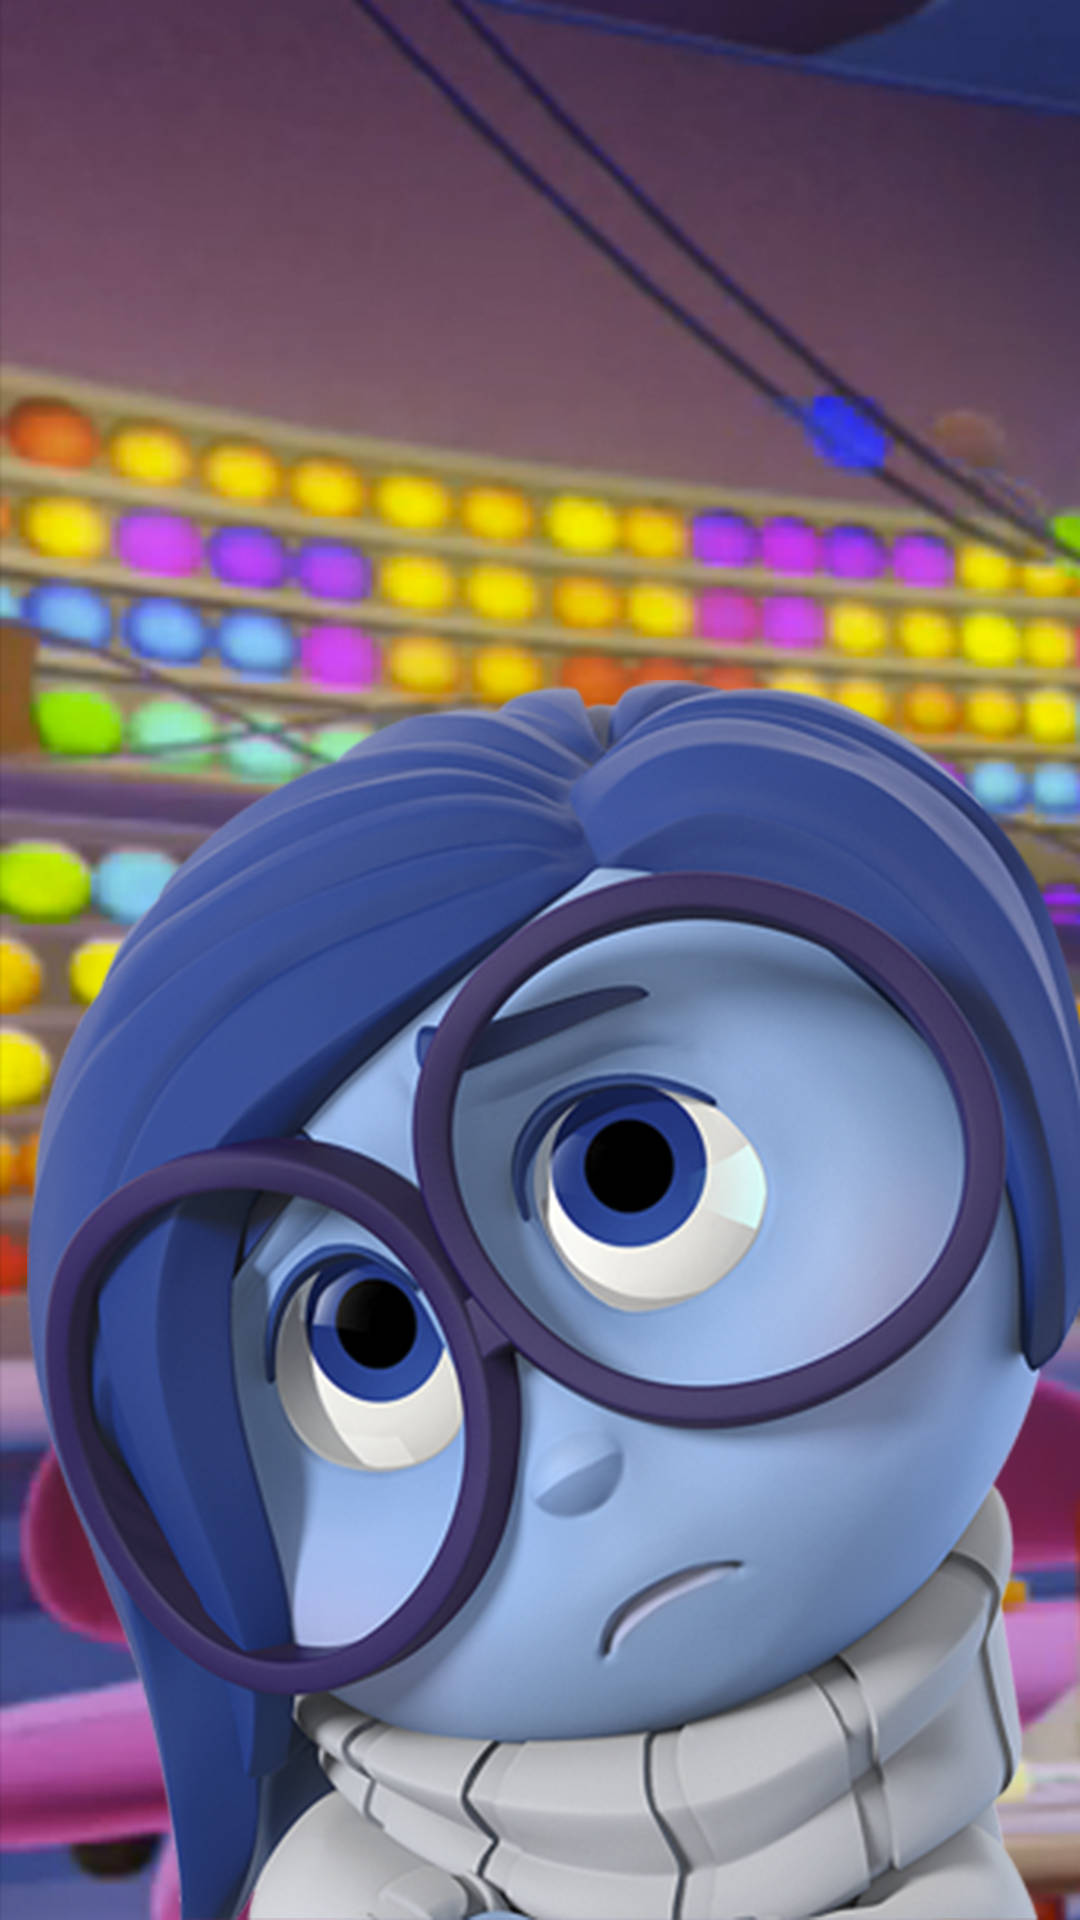 Sadness from Disney Pixar's Inside Out feeling overwhelmed. Wallpaper